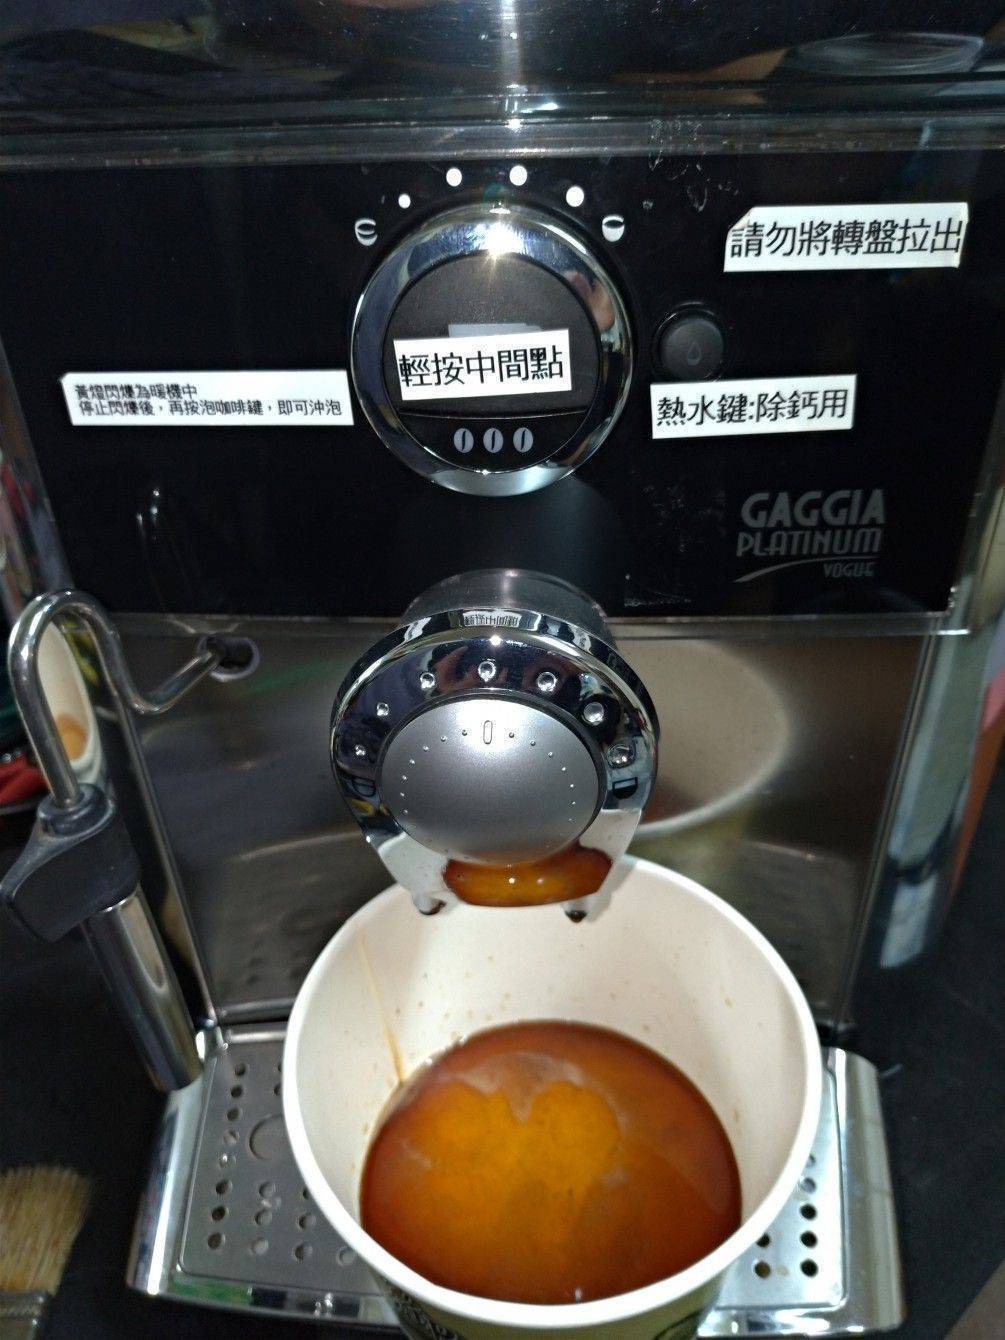 Gaggla-7242全自動咖啡機-出咖啡不順，下粉滑倒段，零件復歸更新處理